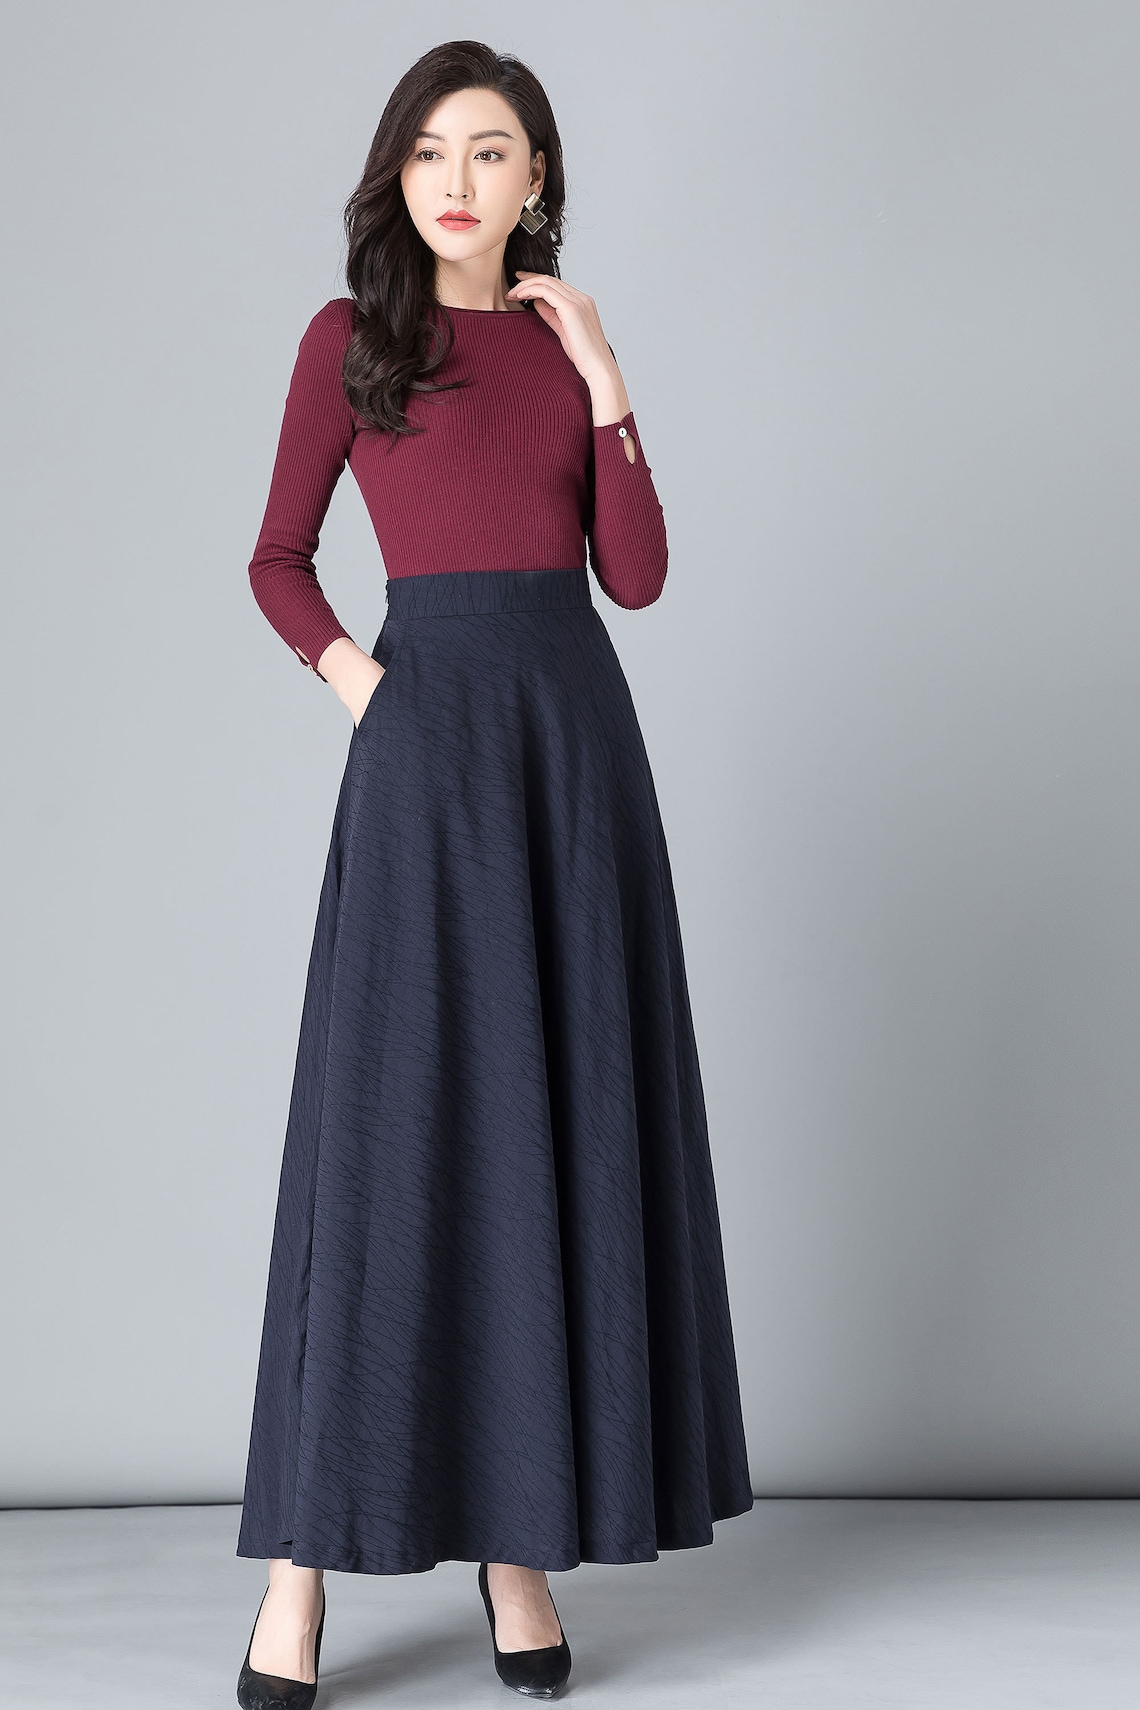 Blue skirt Maxi cotton Linen skirt Elastic waist Linen | Etsy